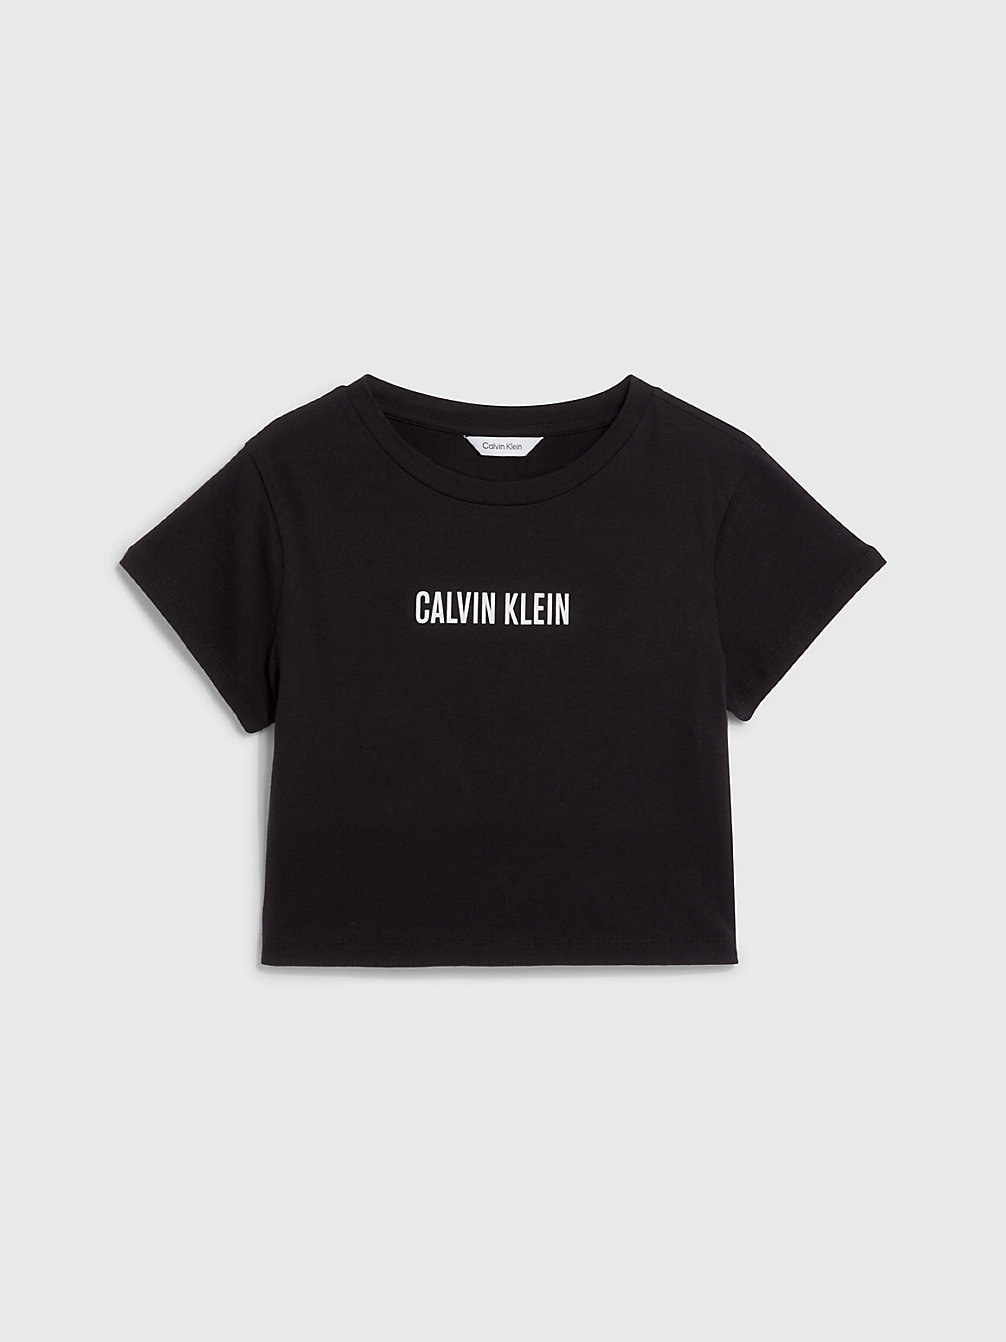 PVH BLACK Girls Cropped Beach T-Shirt - Intense Power undefined girls Calvin Klein